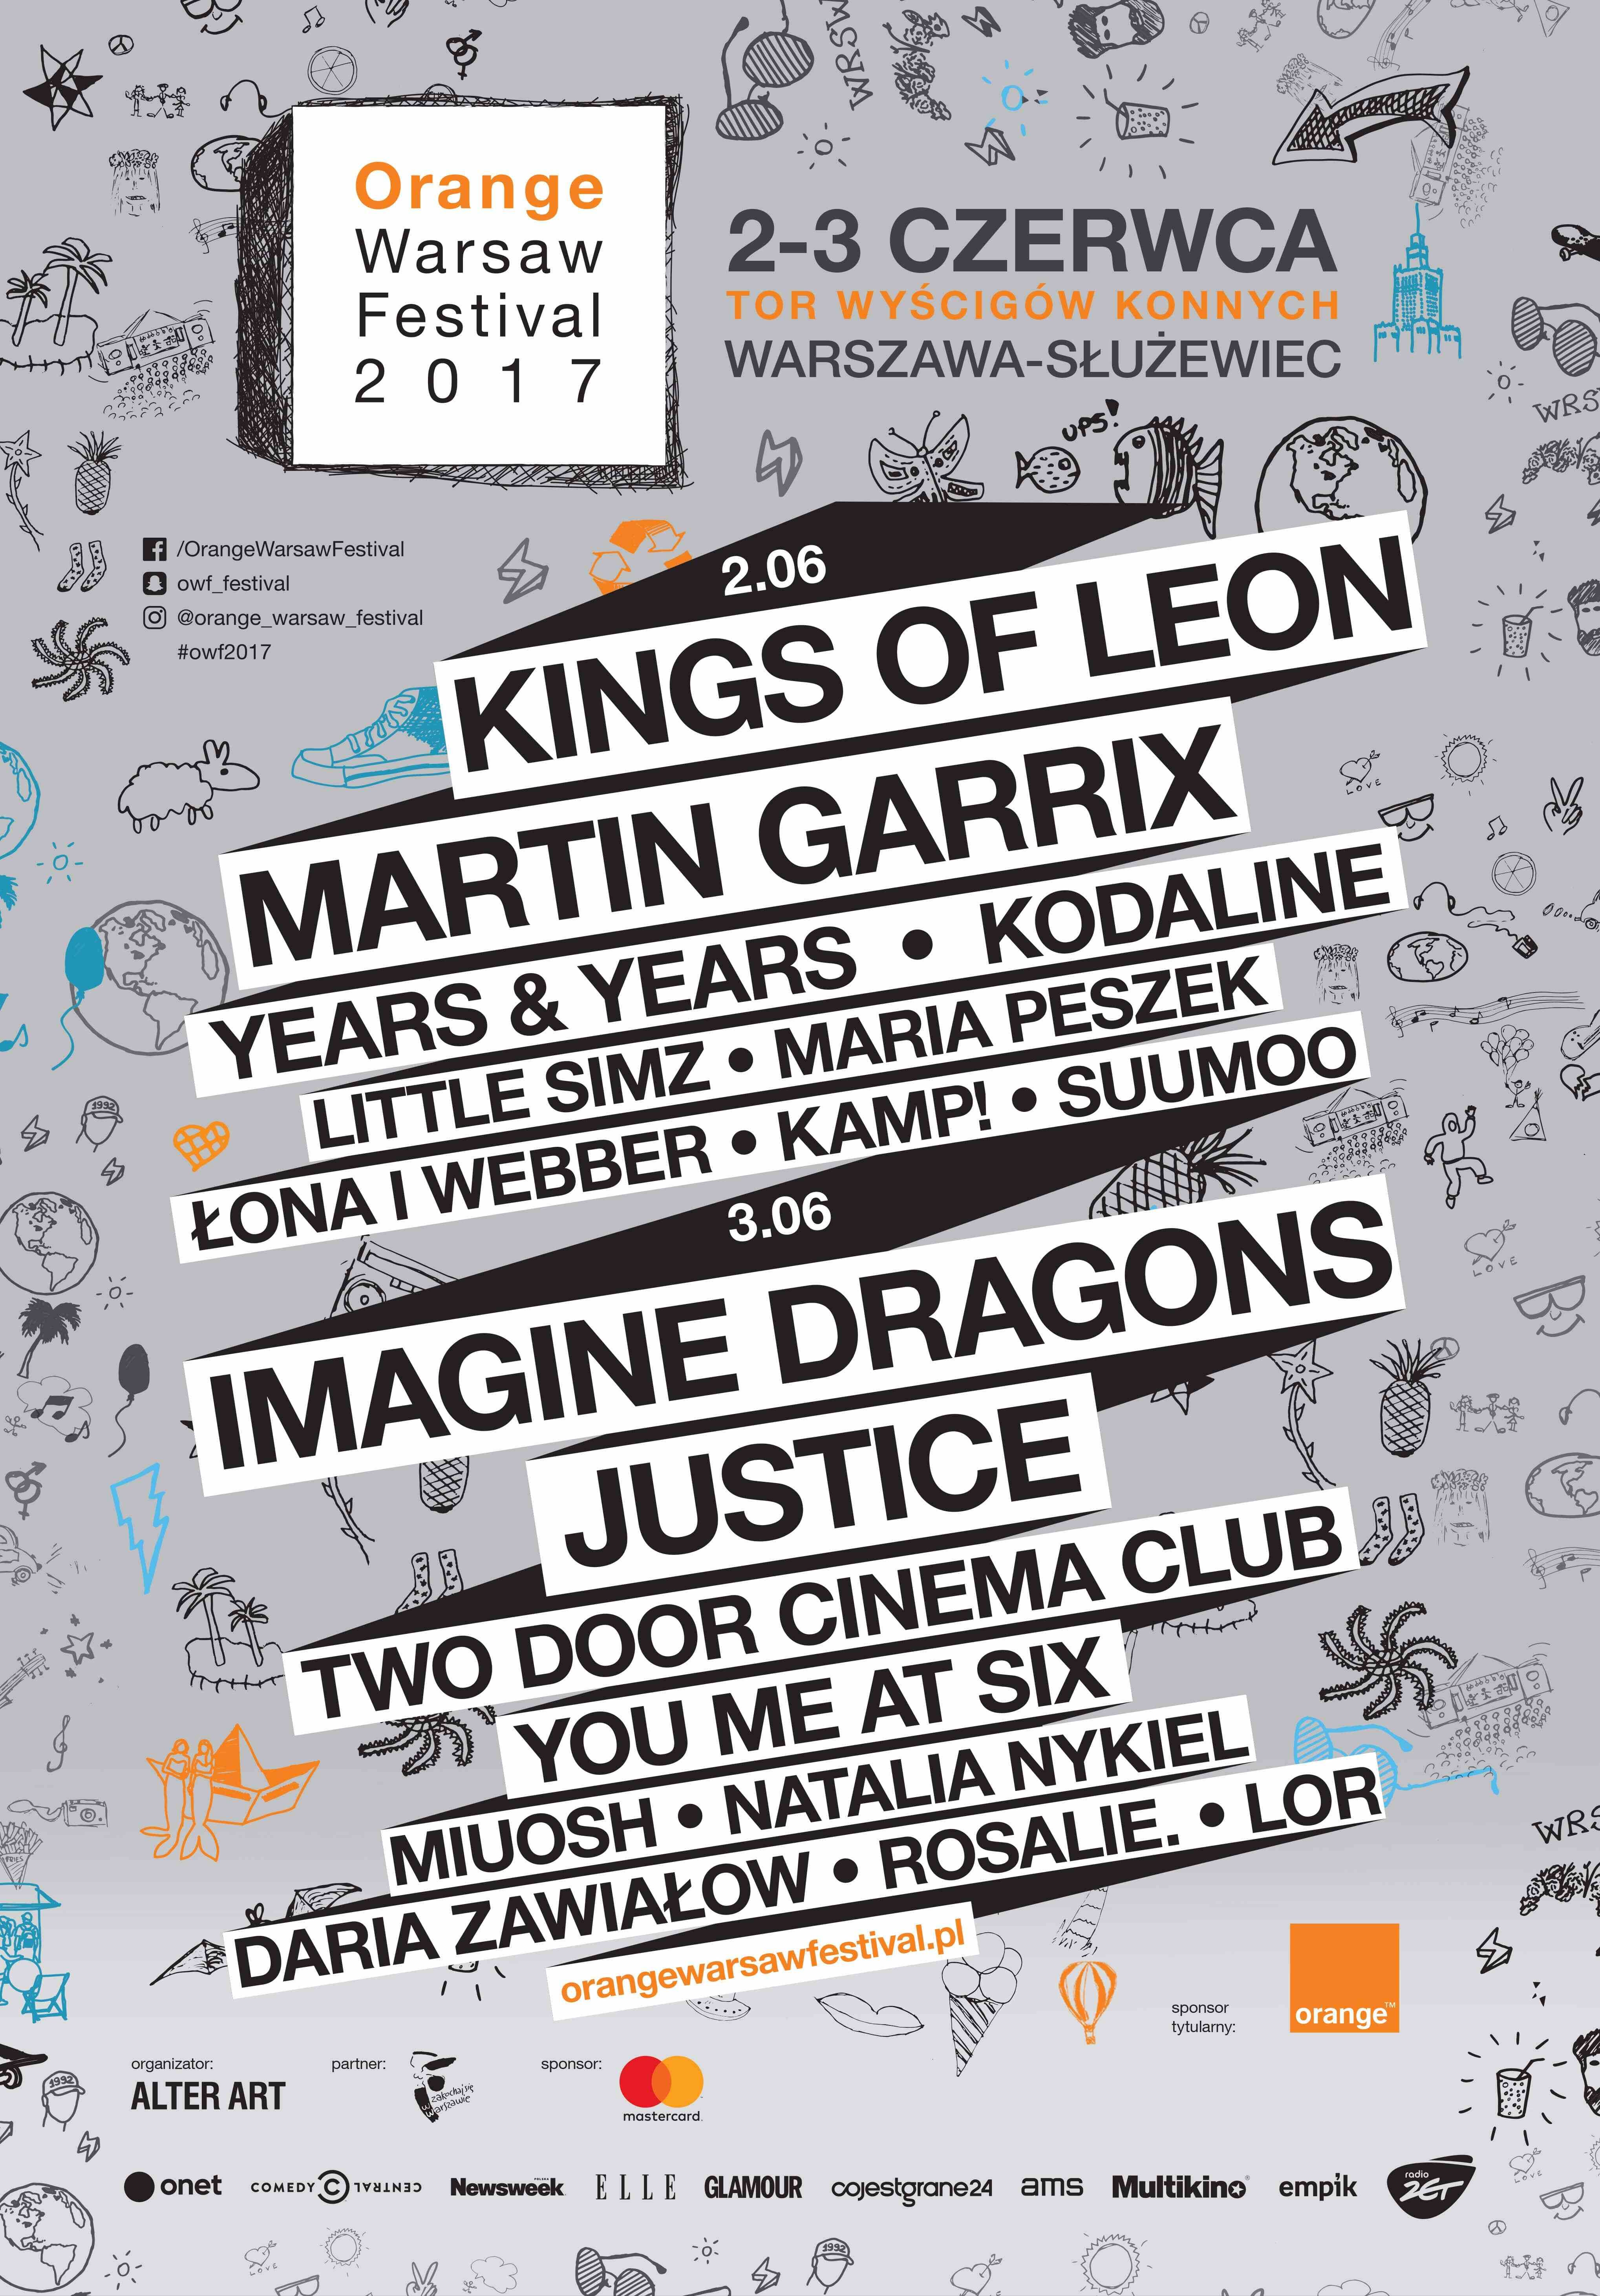 2017 line-up: Kings of Leon, Imagine Dragons, Martin Garrix, Justice, Years and Years, Kopaline i inni